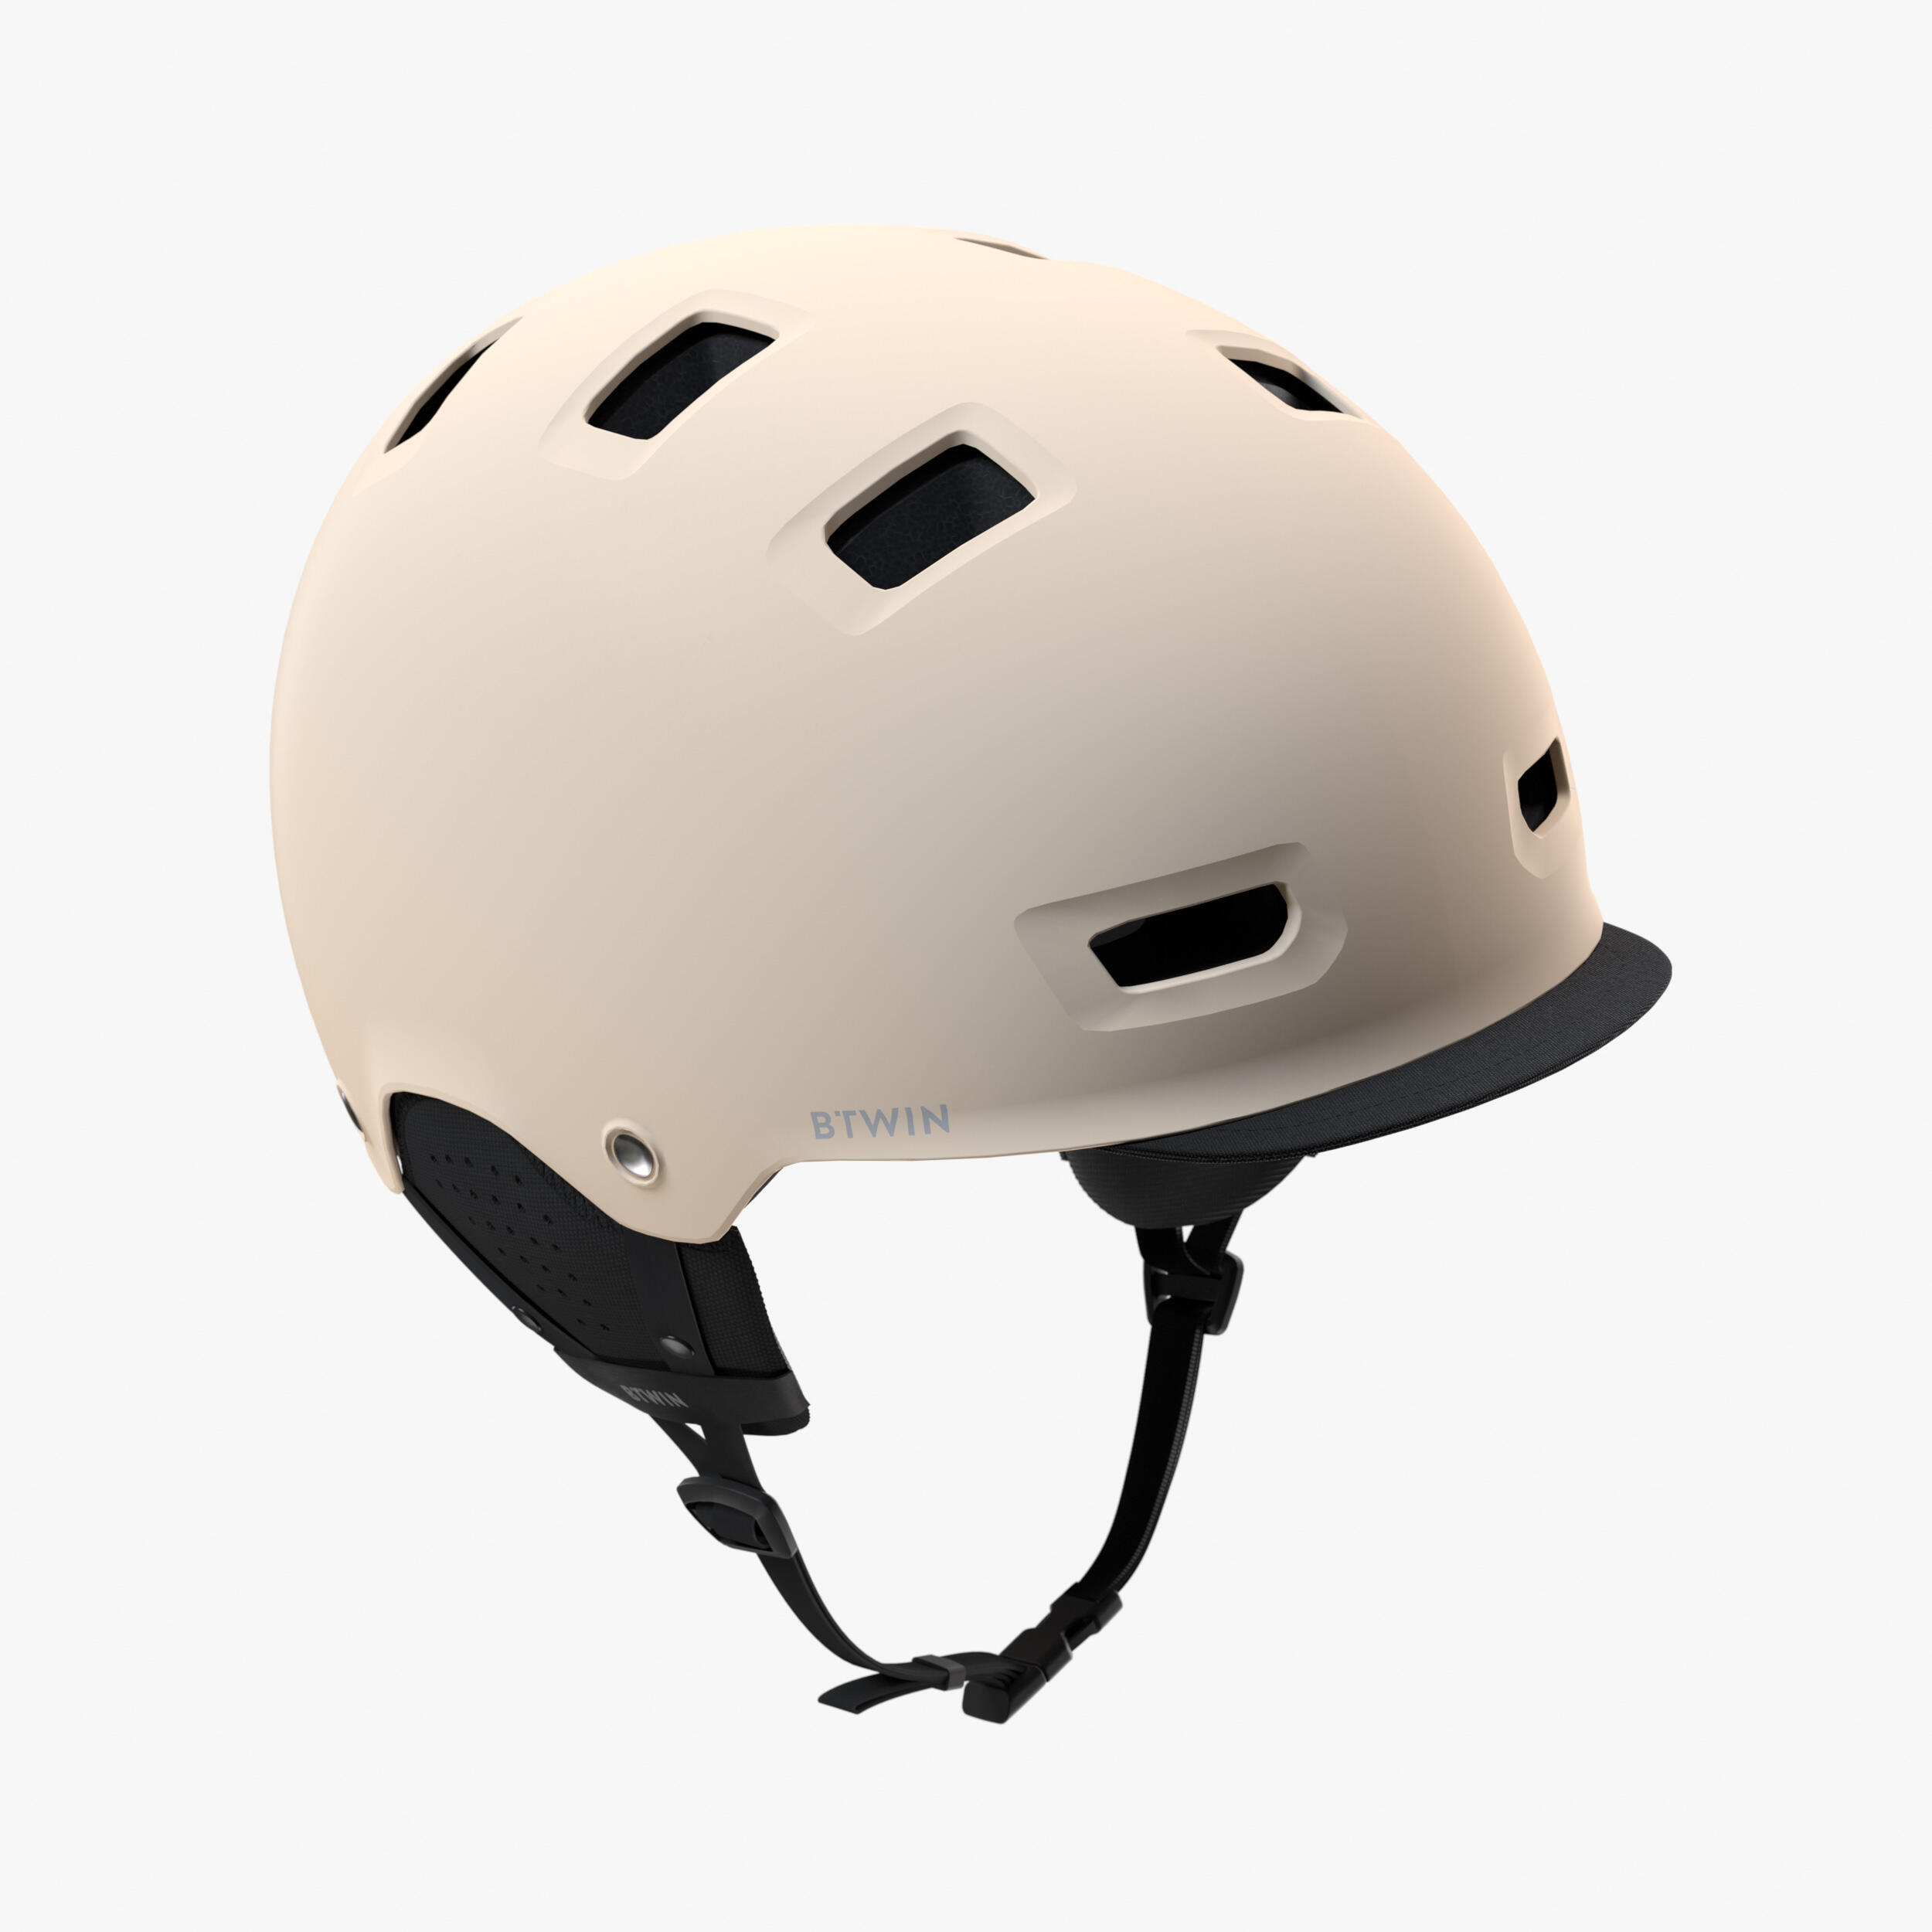 City Cycling Bowl Helmet